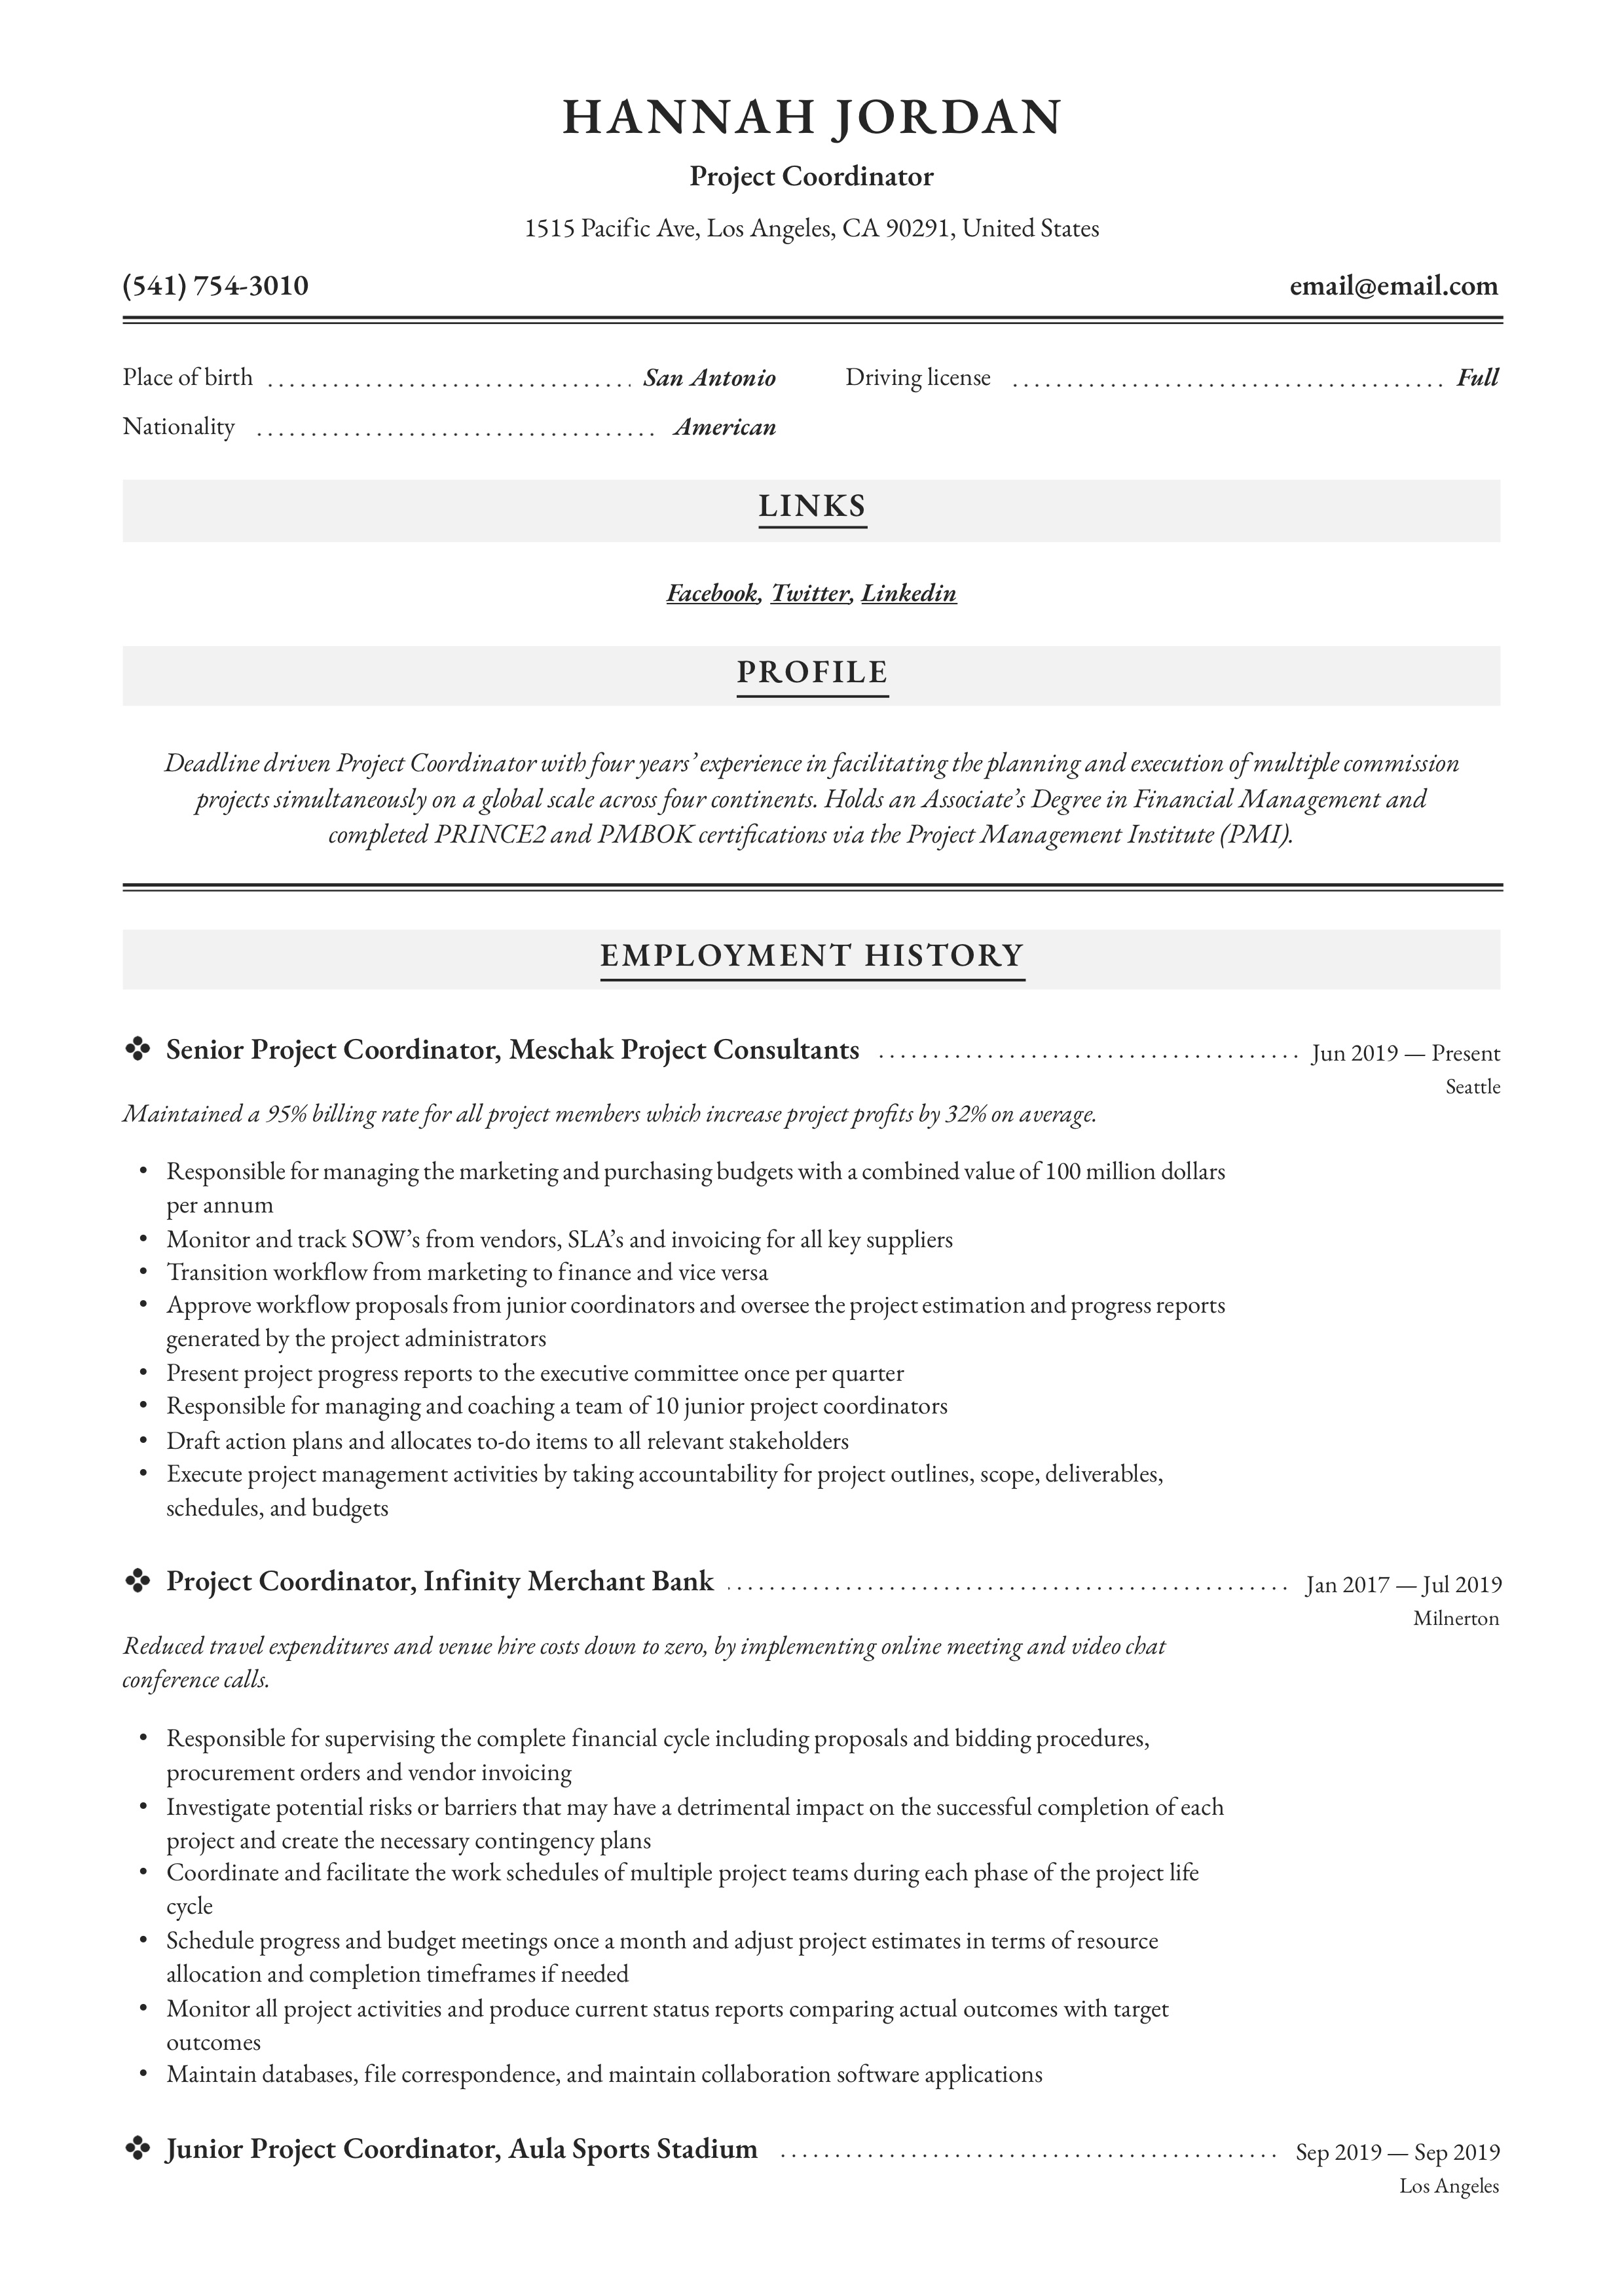 Resume Sample Project Coordinator